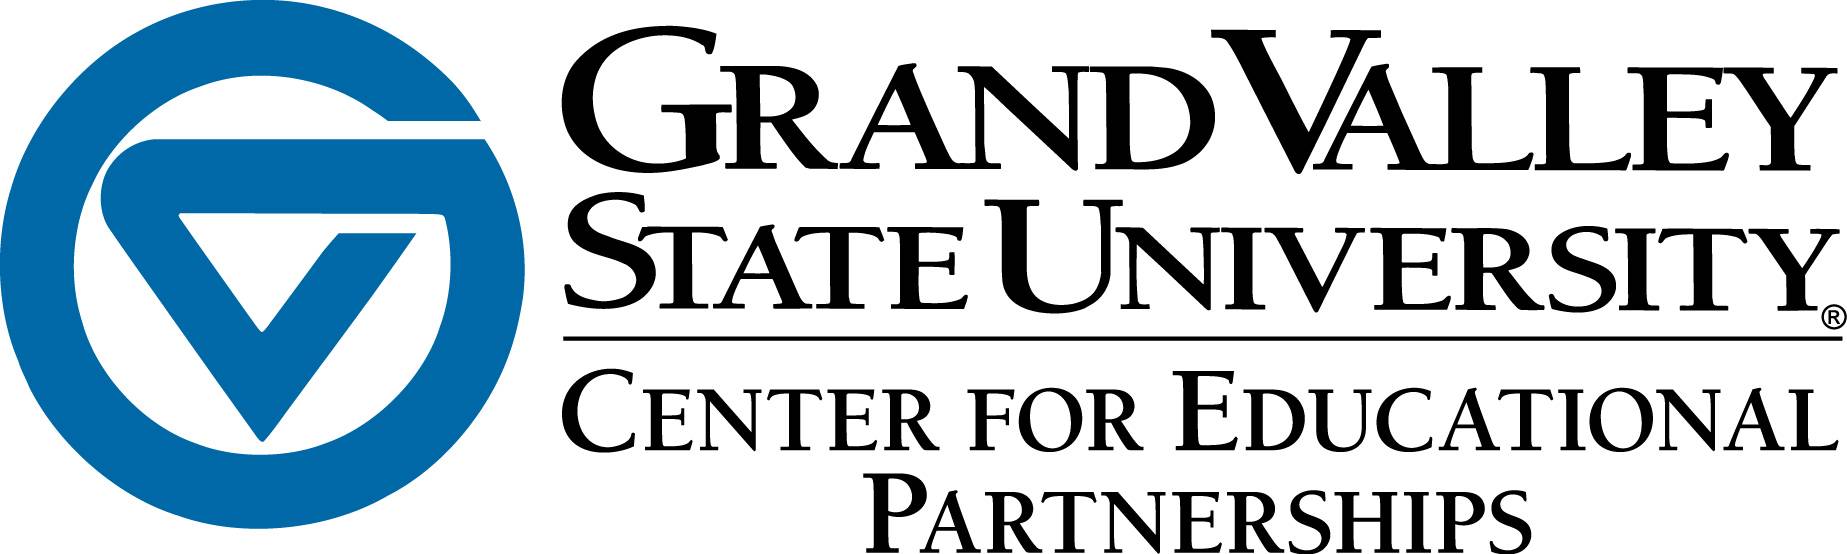 Grand Valley State University Center for Educational Partnerships